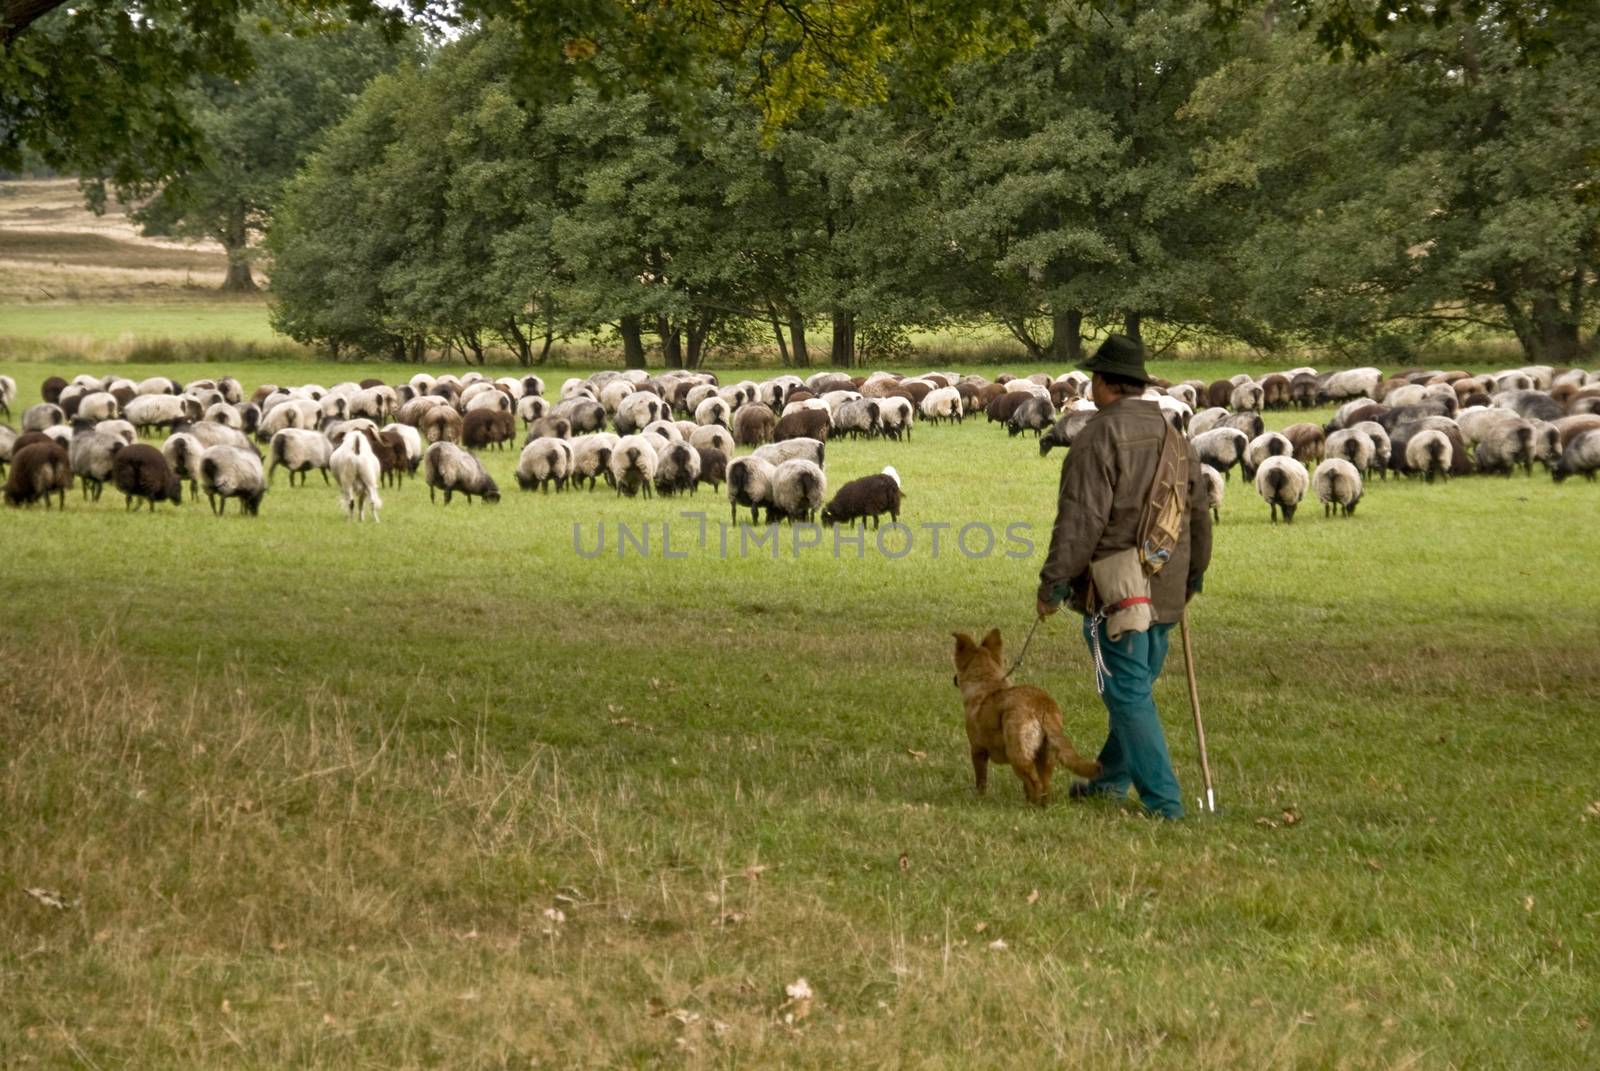 Sheep in Lueneburg Heath by 3quarks